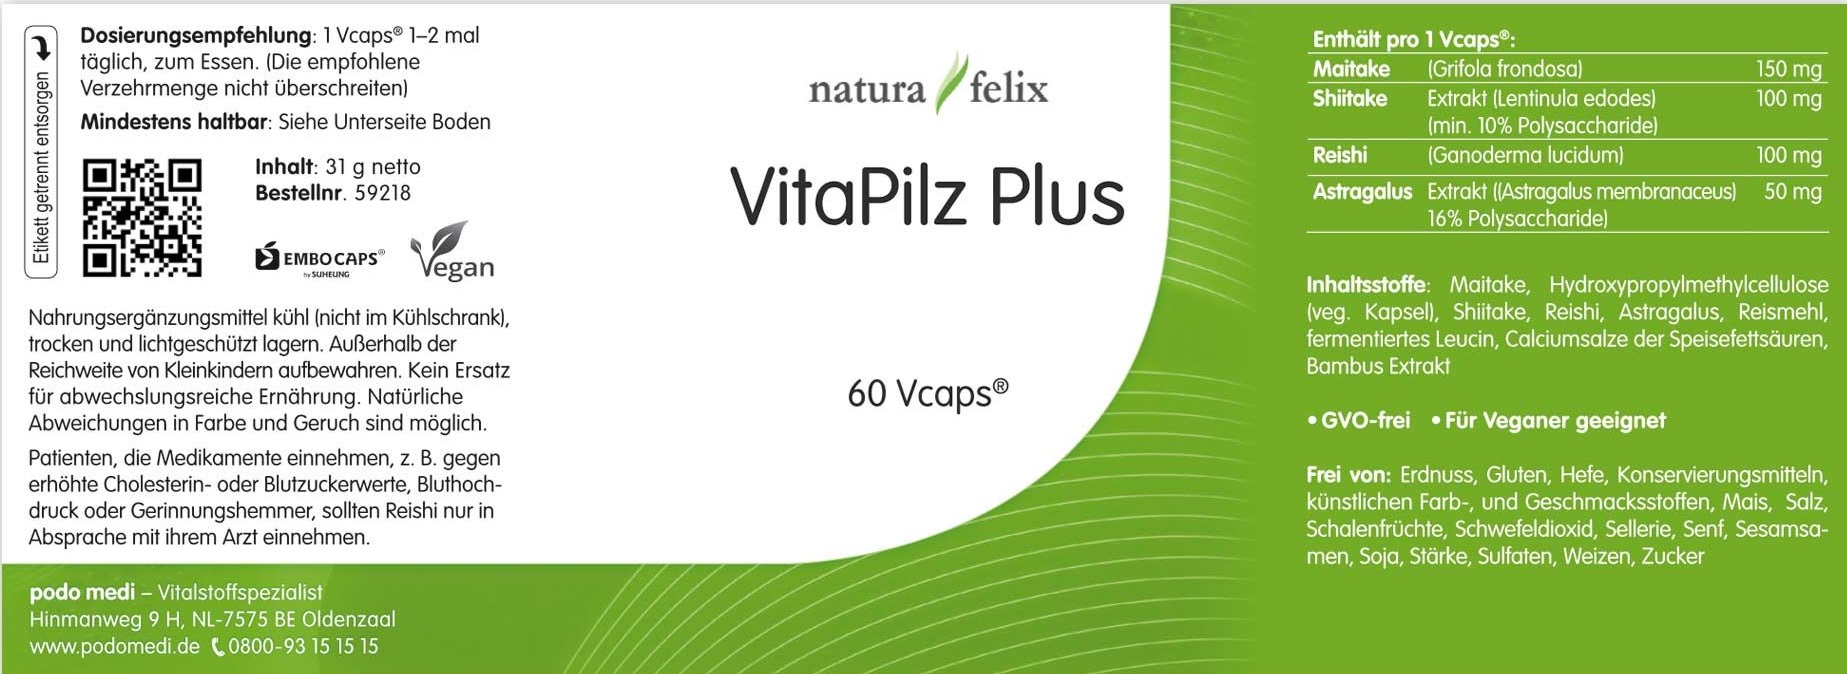 natura-felix.vitalpilz-plus.59219.8717729199480.label